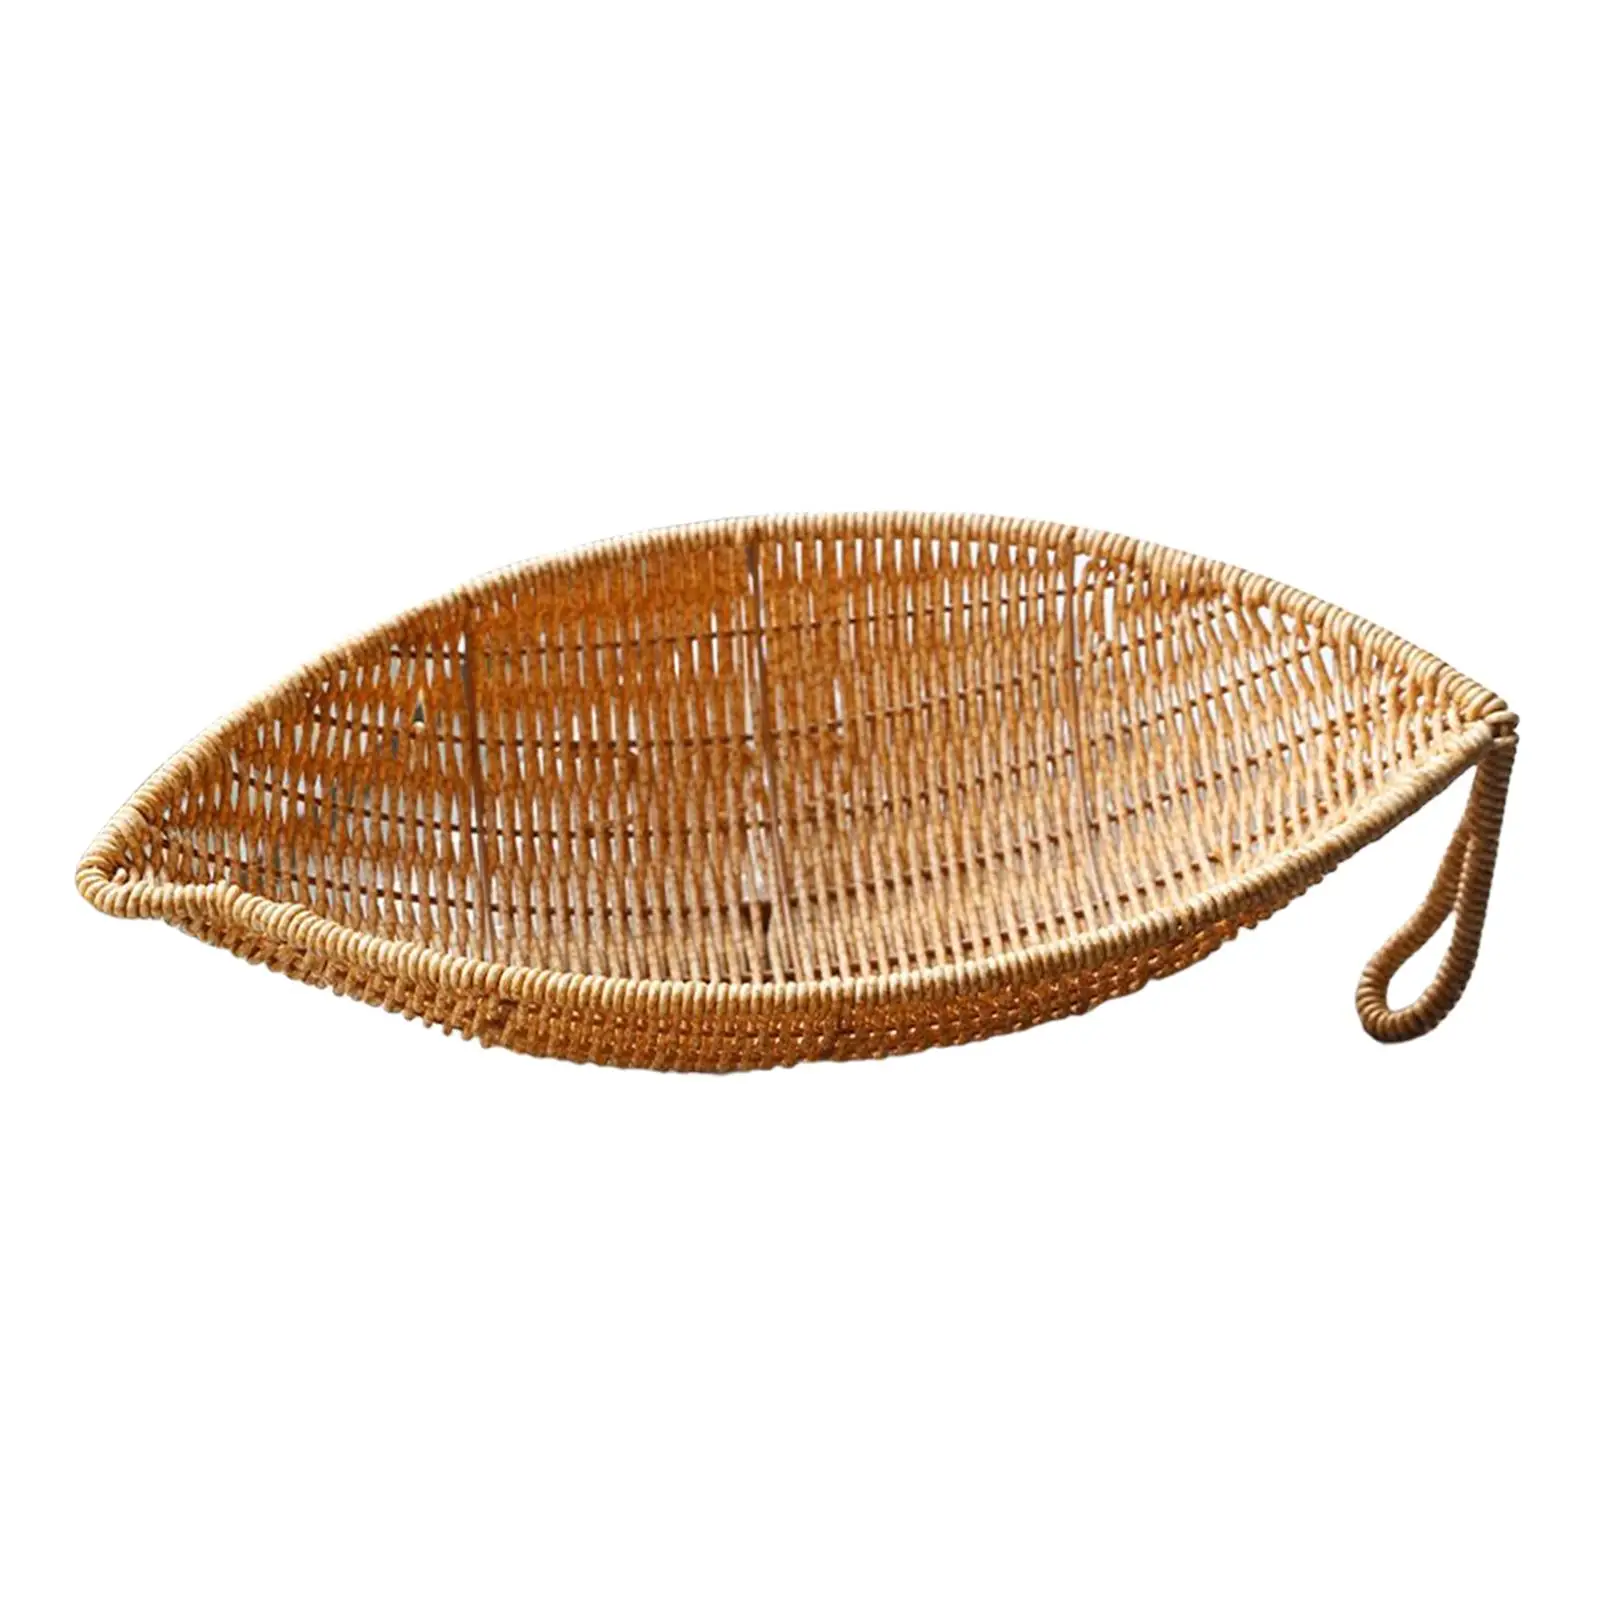 Hand Woven Wicker Vegetable Storage Storage Basket Wicker Basket for Bathroom Bread